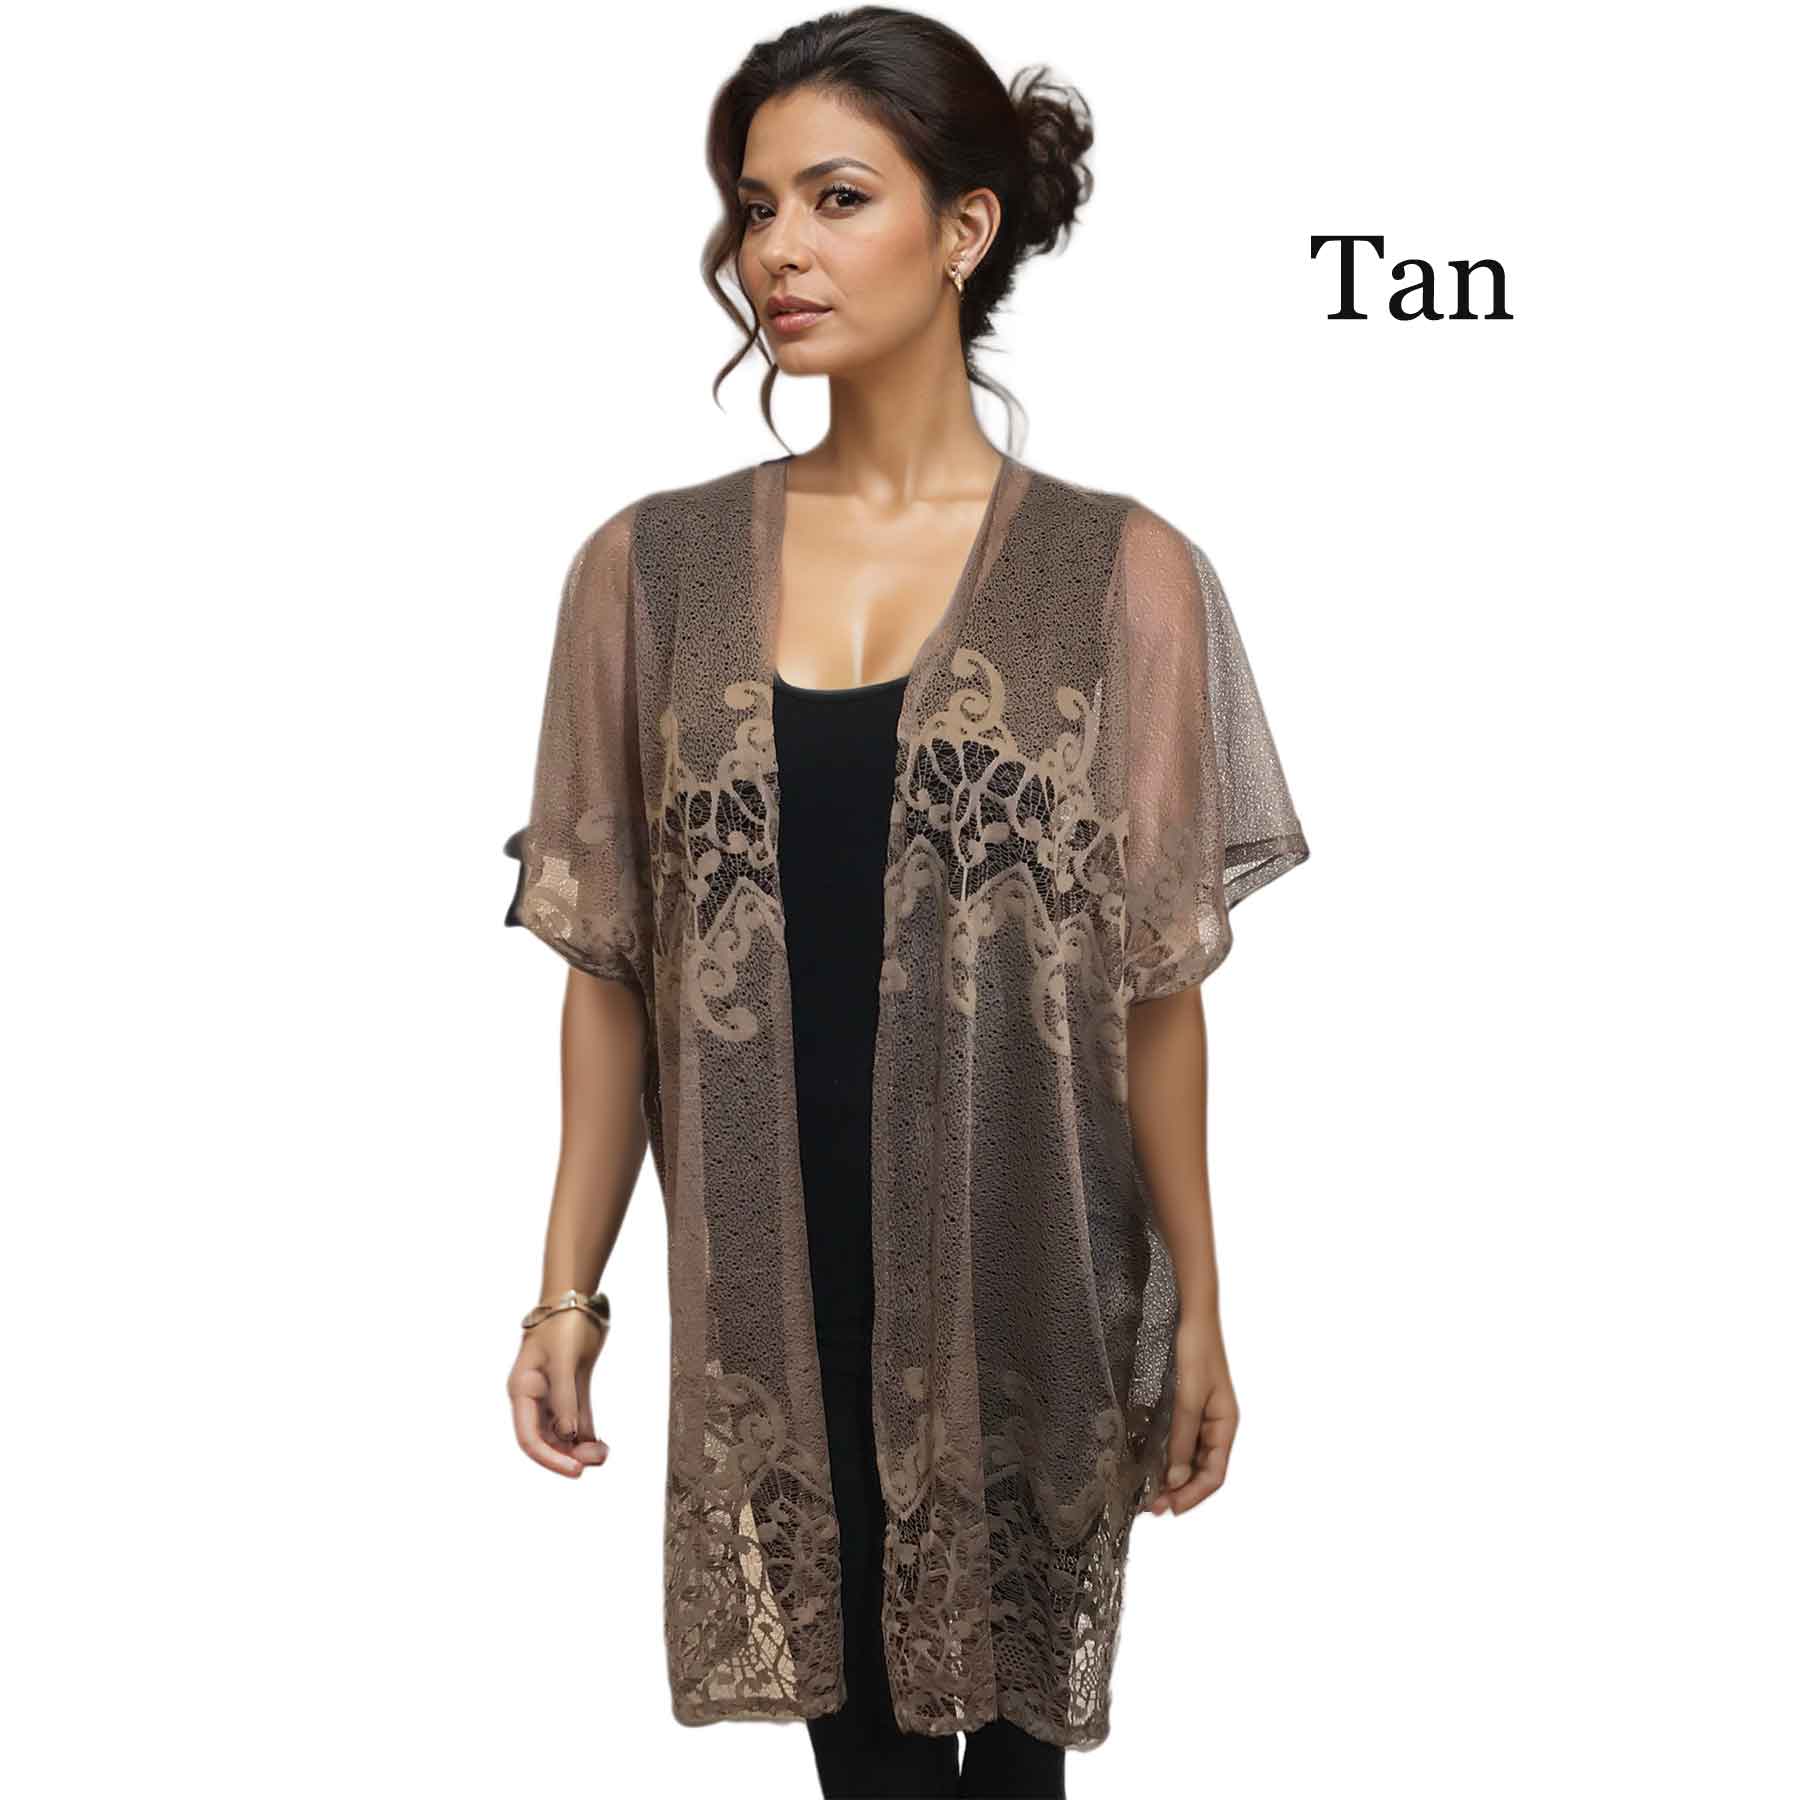 Tan Kimono - Lace Design 9251